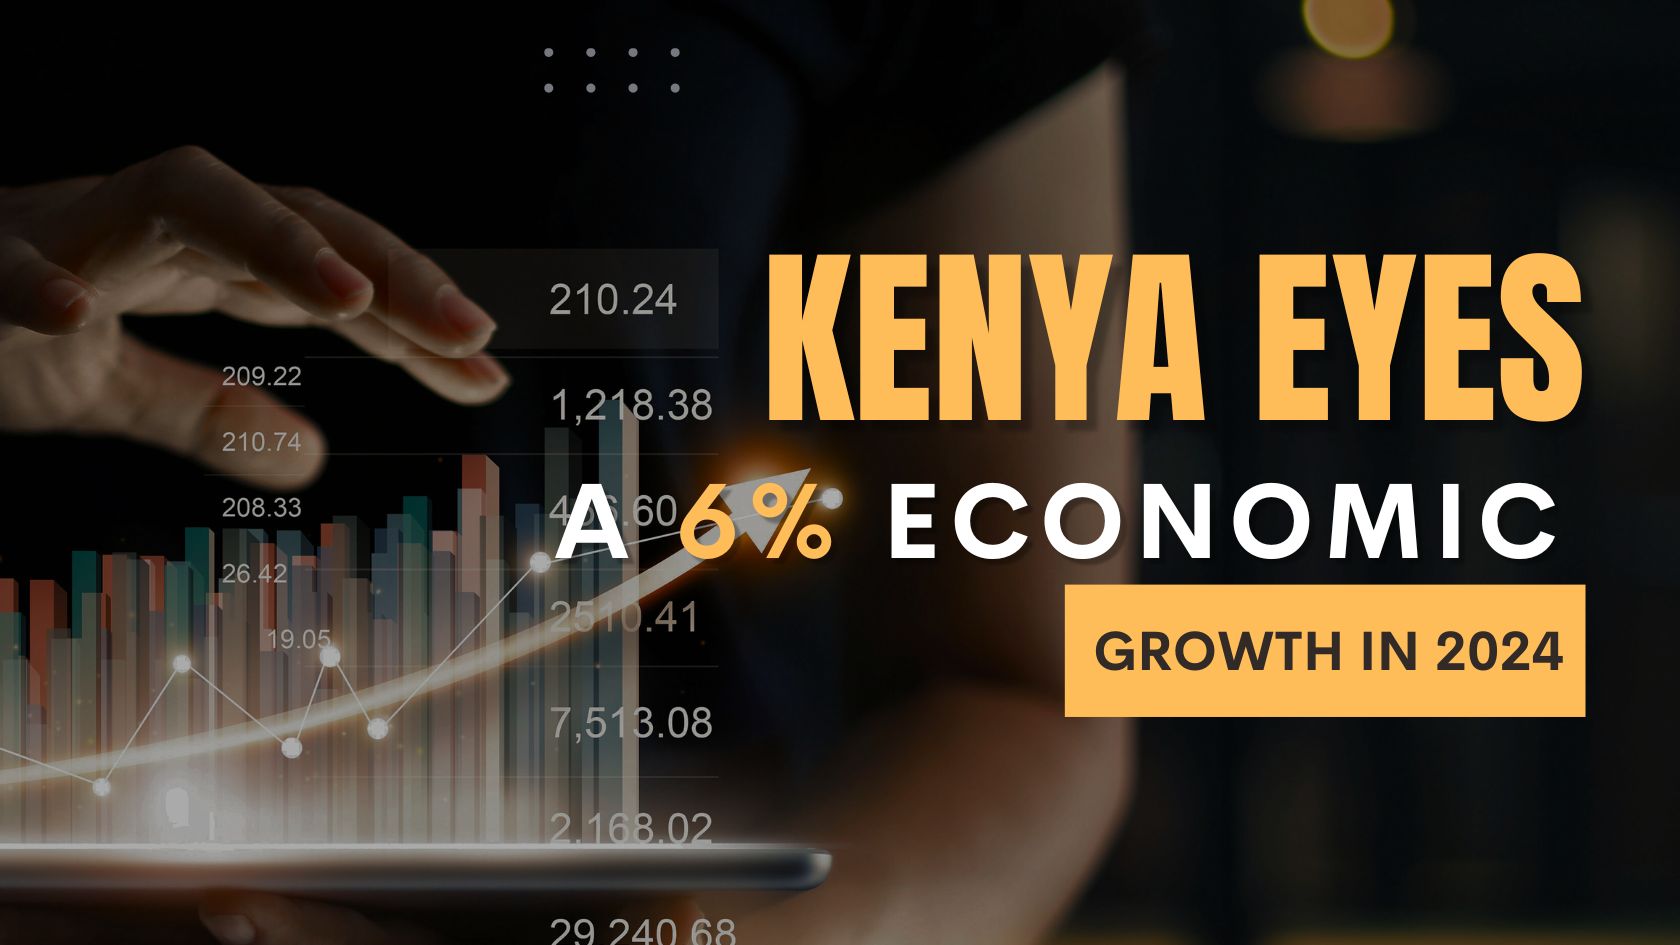 Kenya Eyes a 6% Economic Growth in 2024